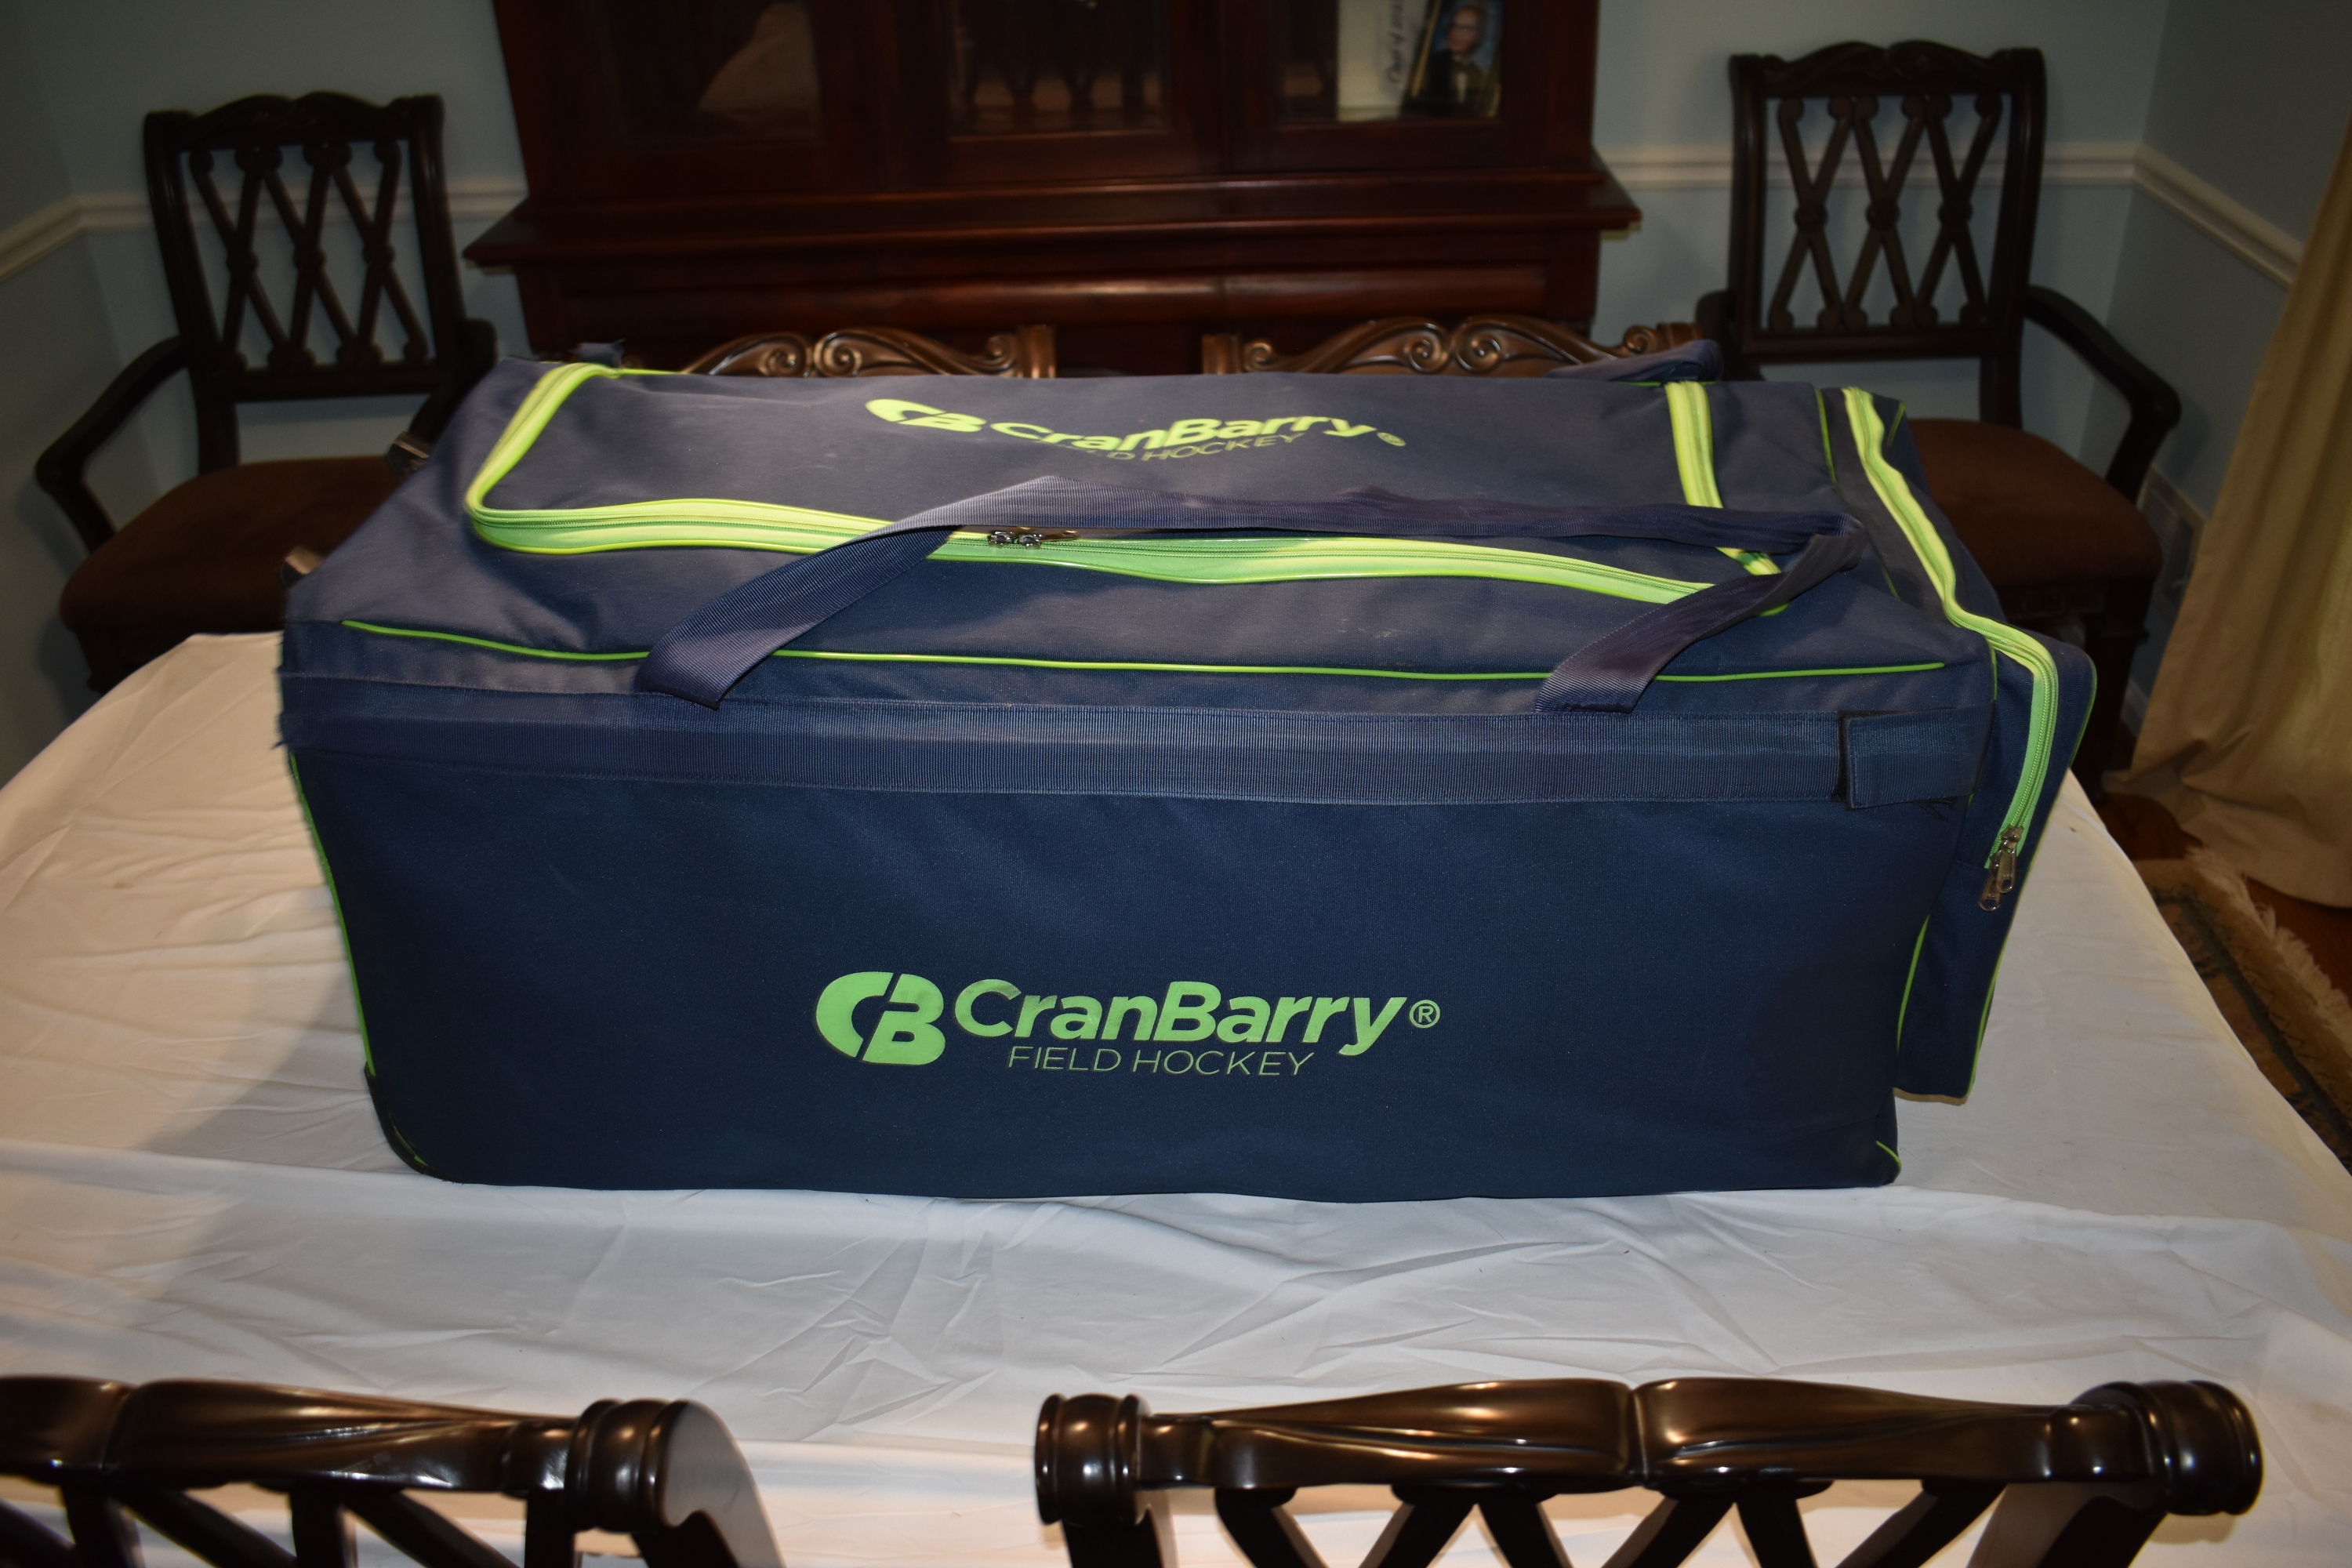 CranBarry XL Wheeled Field Hockey Goalie Equipment Bag - Great Condition!